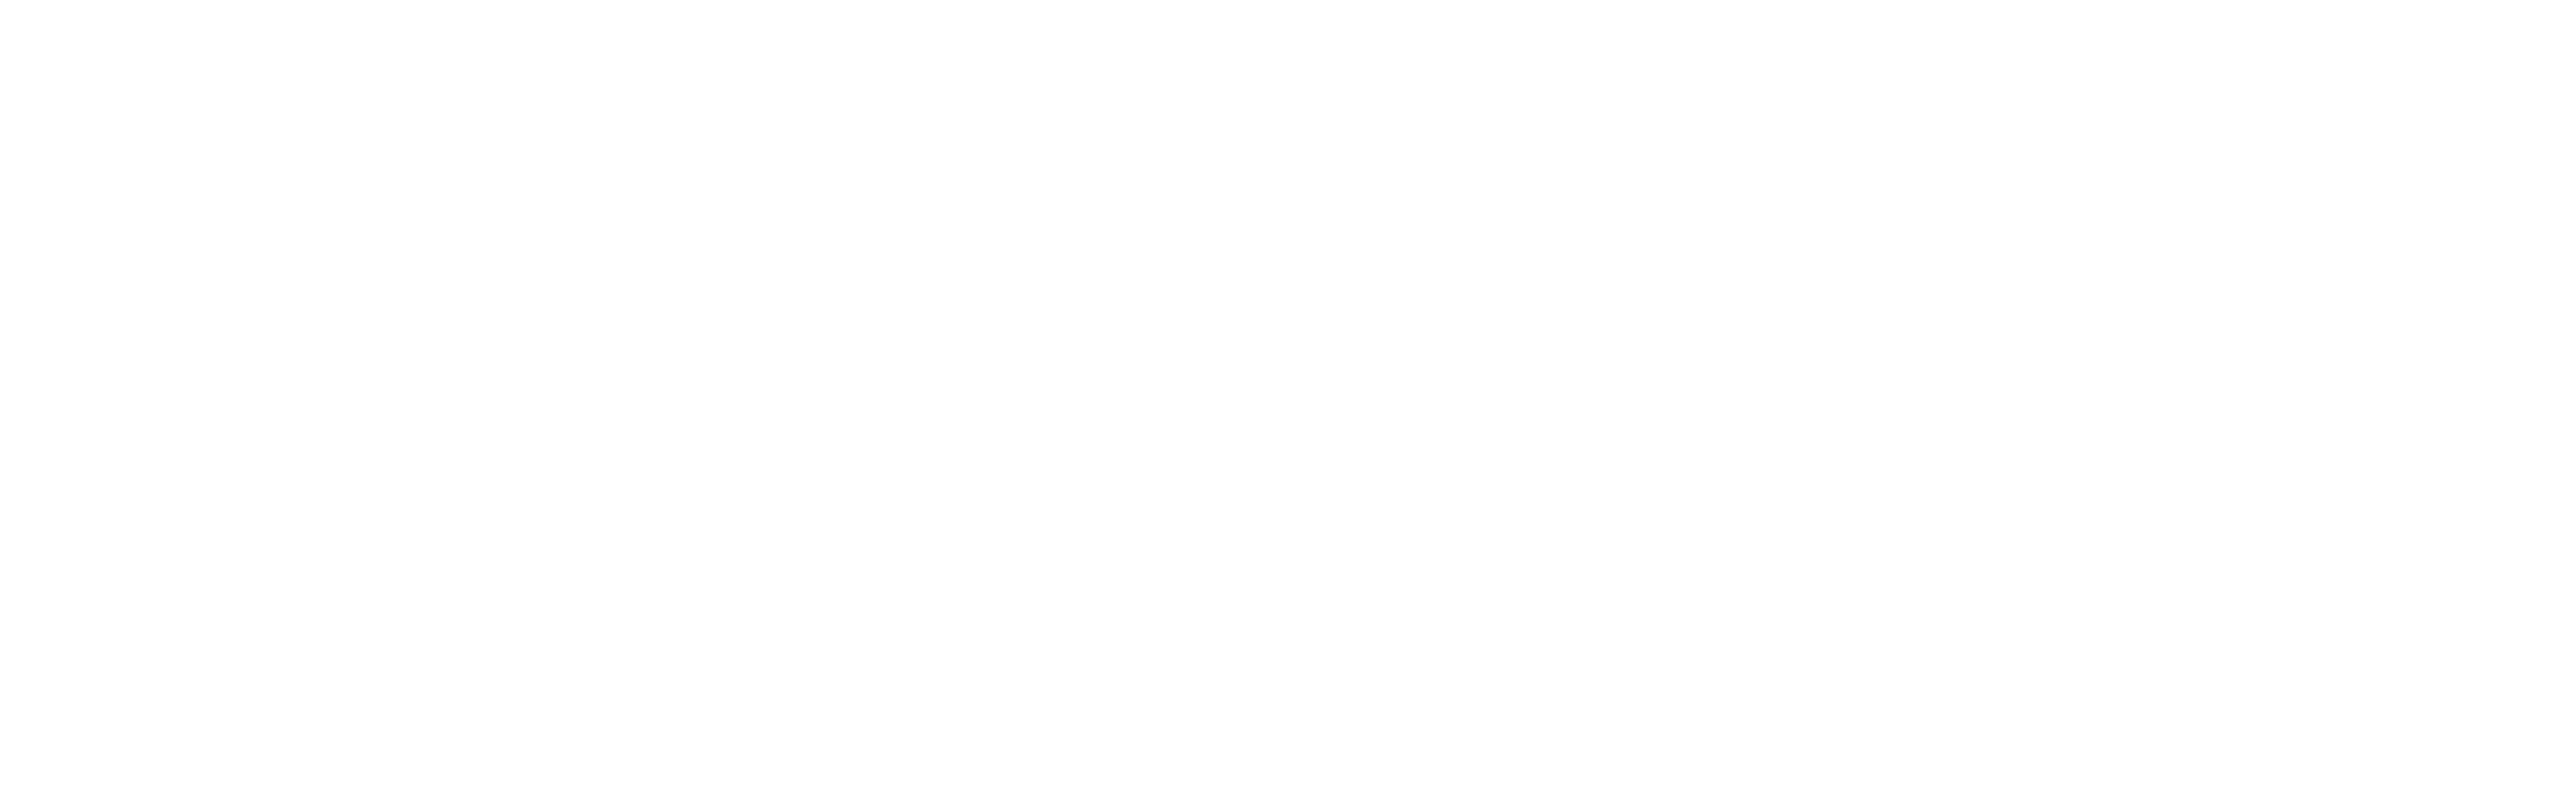 lokite-application-kitesurf-logo-header